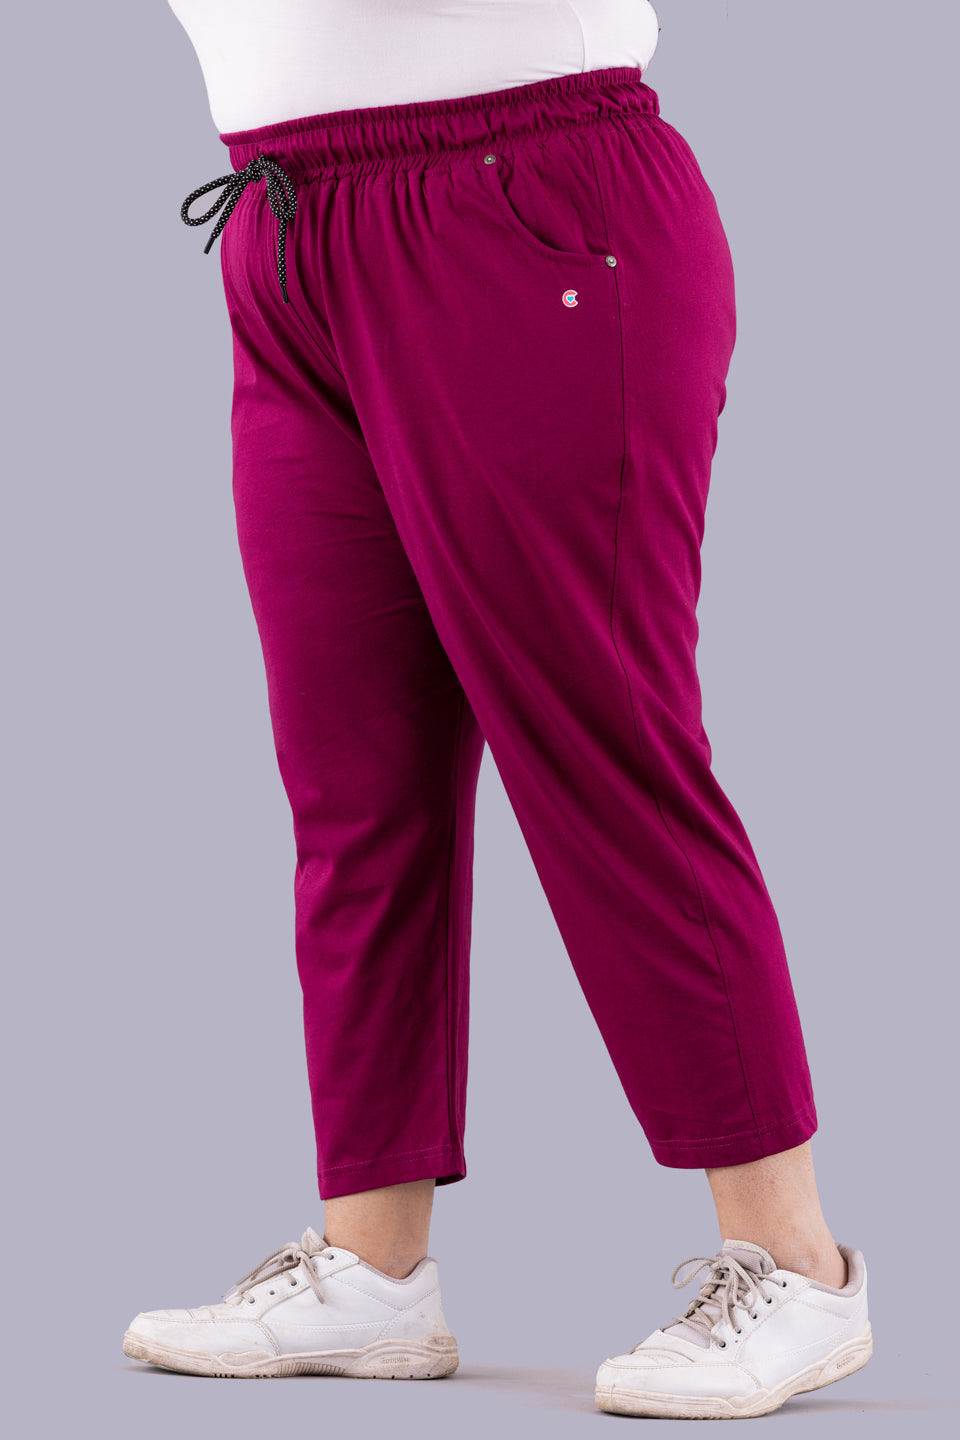 CaComMARK PI Capris/Cargo Pants for Women Plus Size Ladies Solid